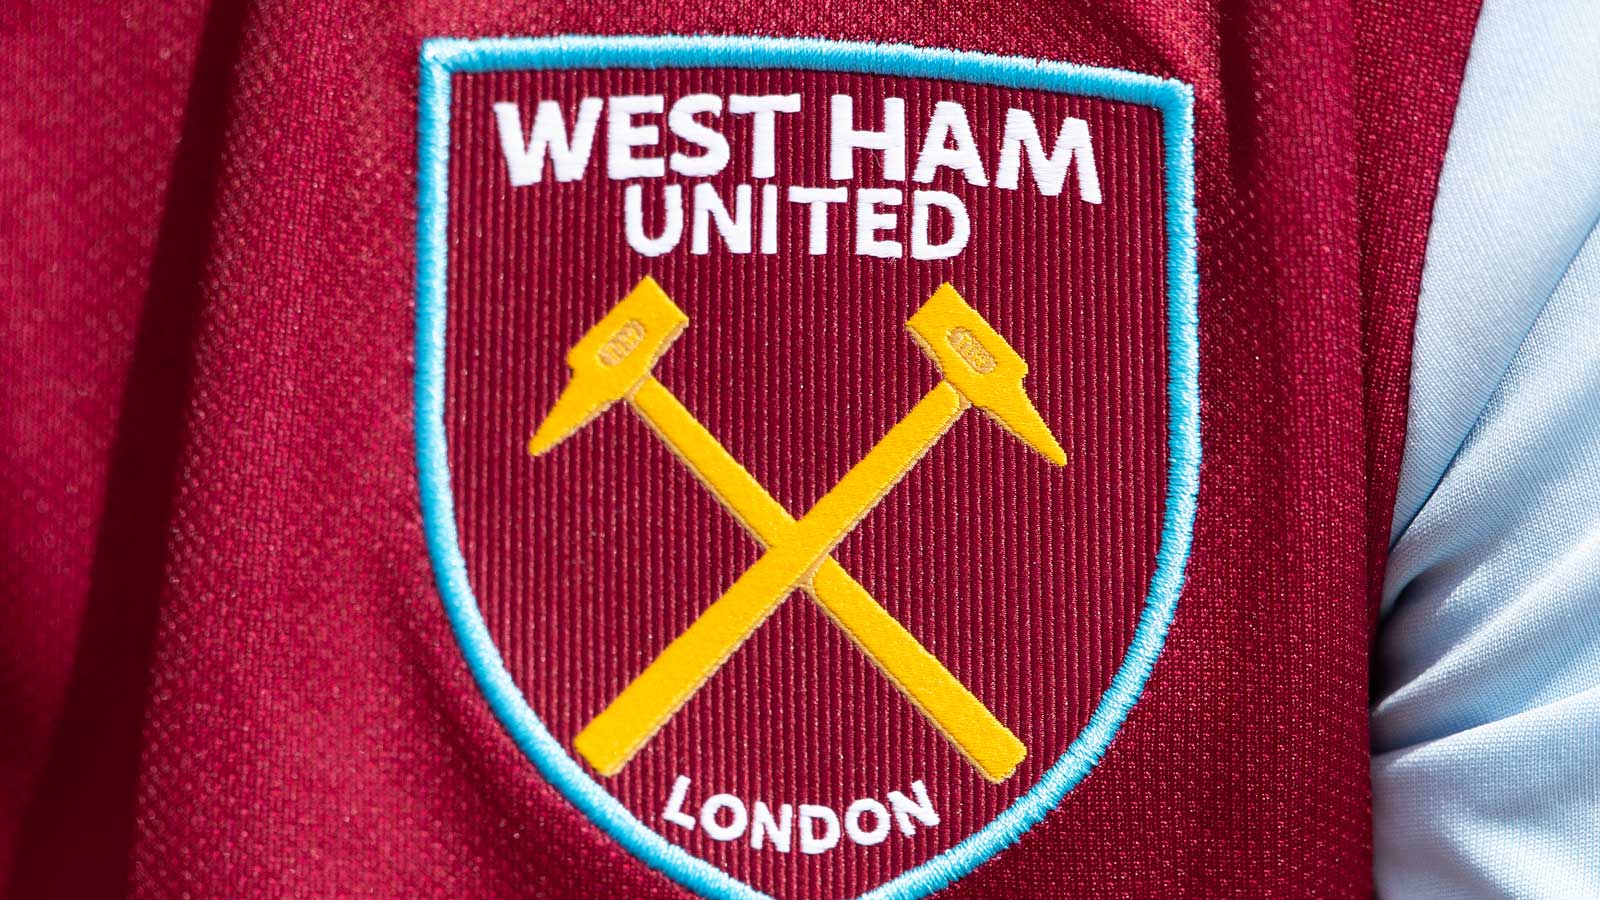 A West Ham United crest